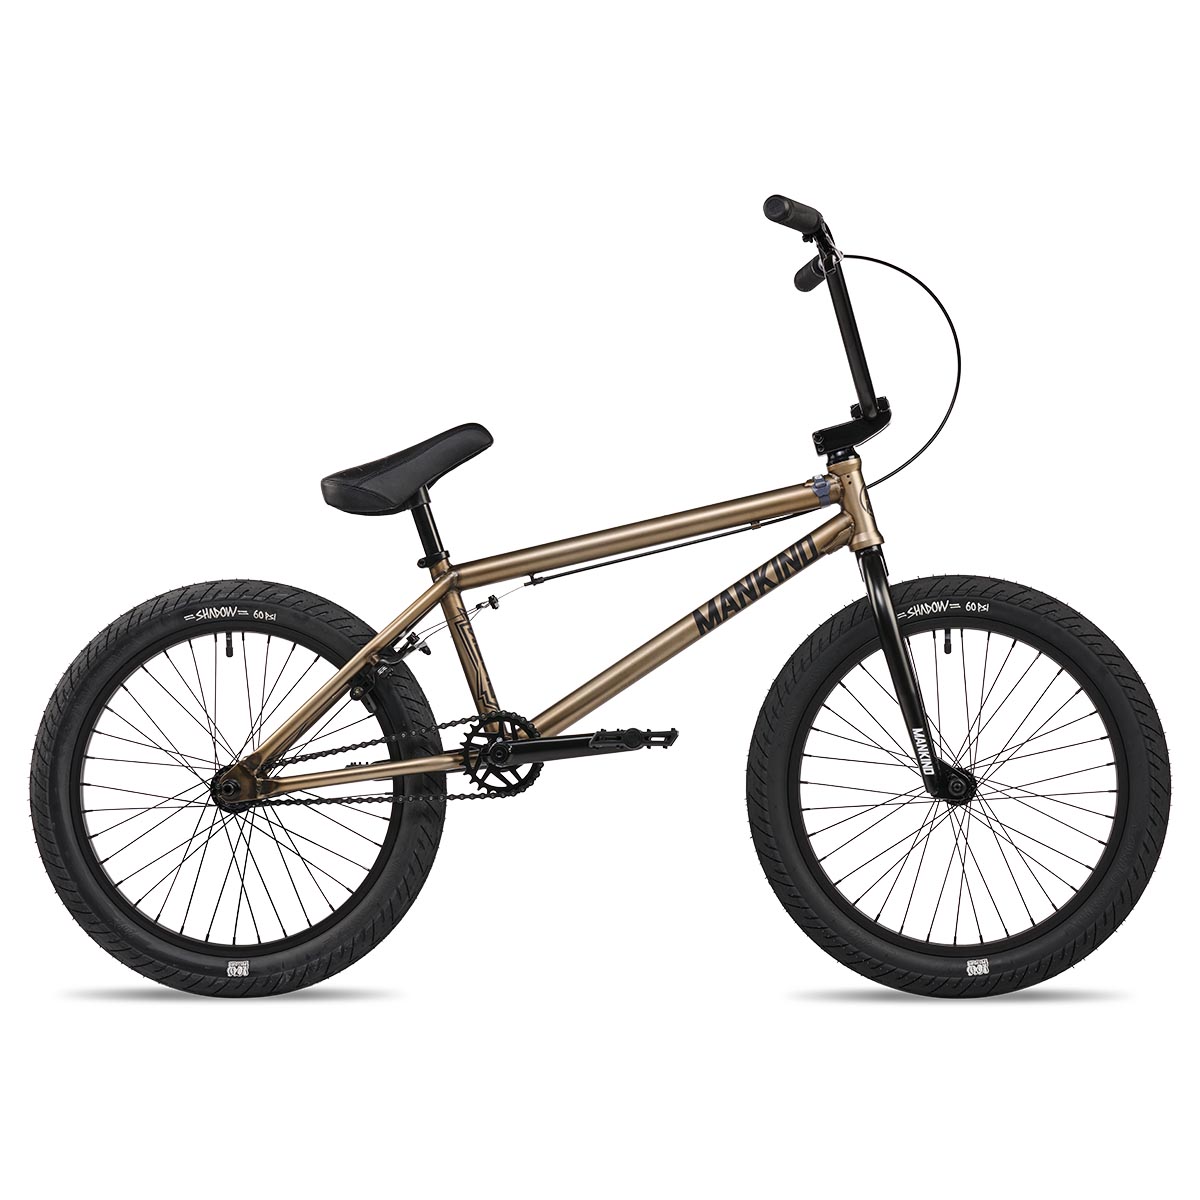 Mankind Sureshot Bike semi matte trans bronze-002